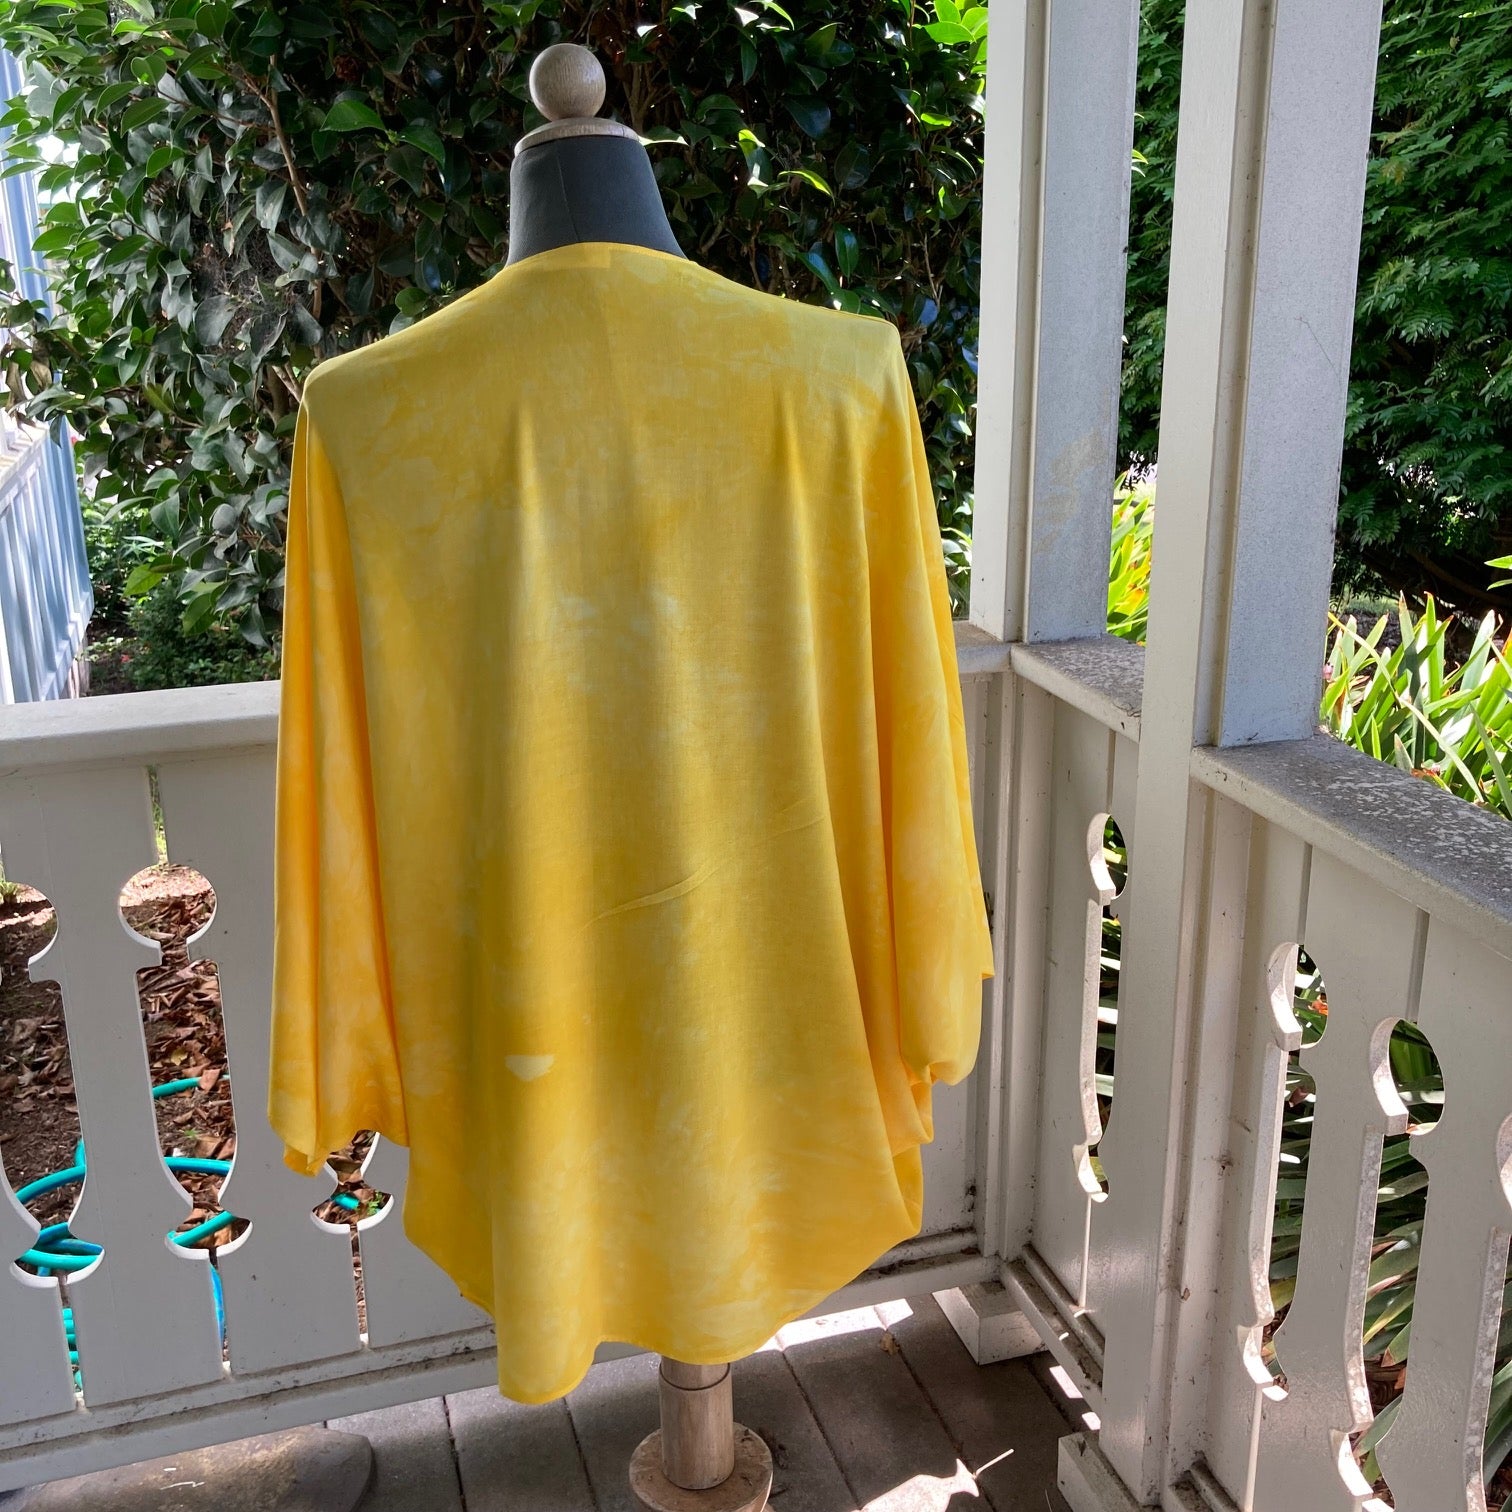 Ohe Kapala Kimono Shrug (KiShrug) In Golden Yellow with the Mauna and Lehua